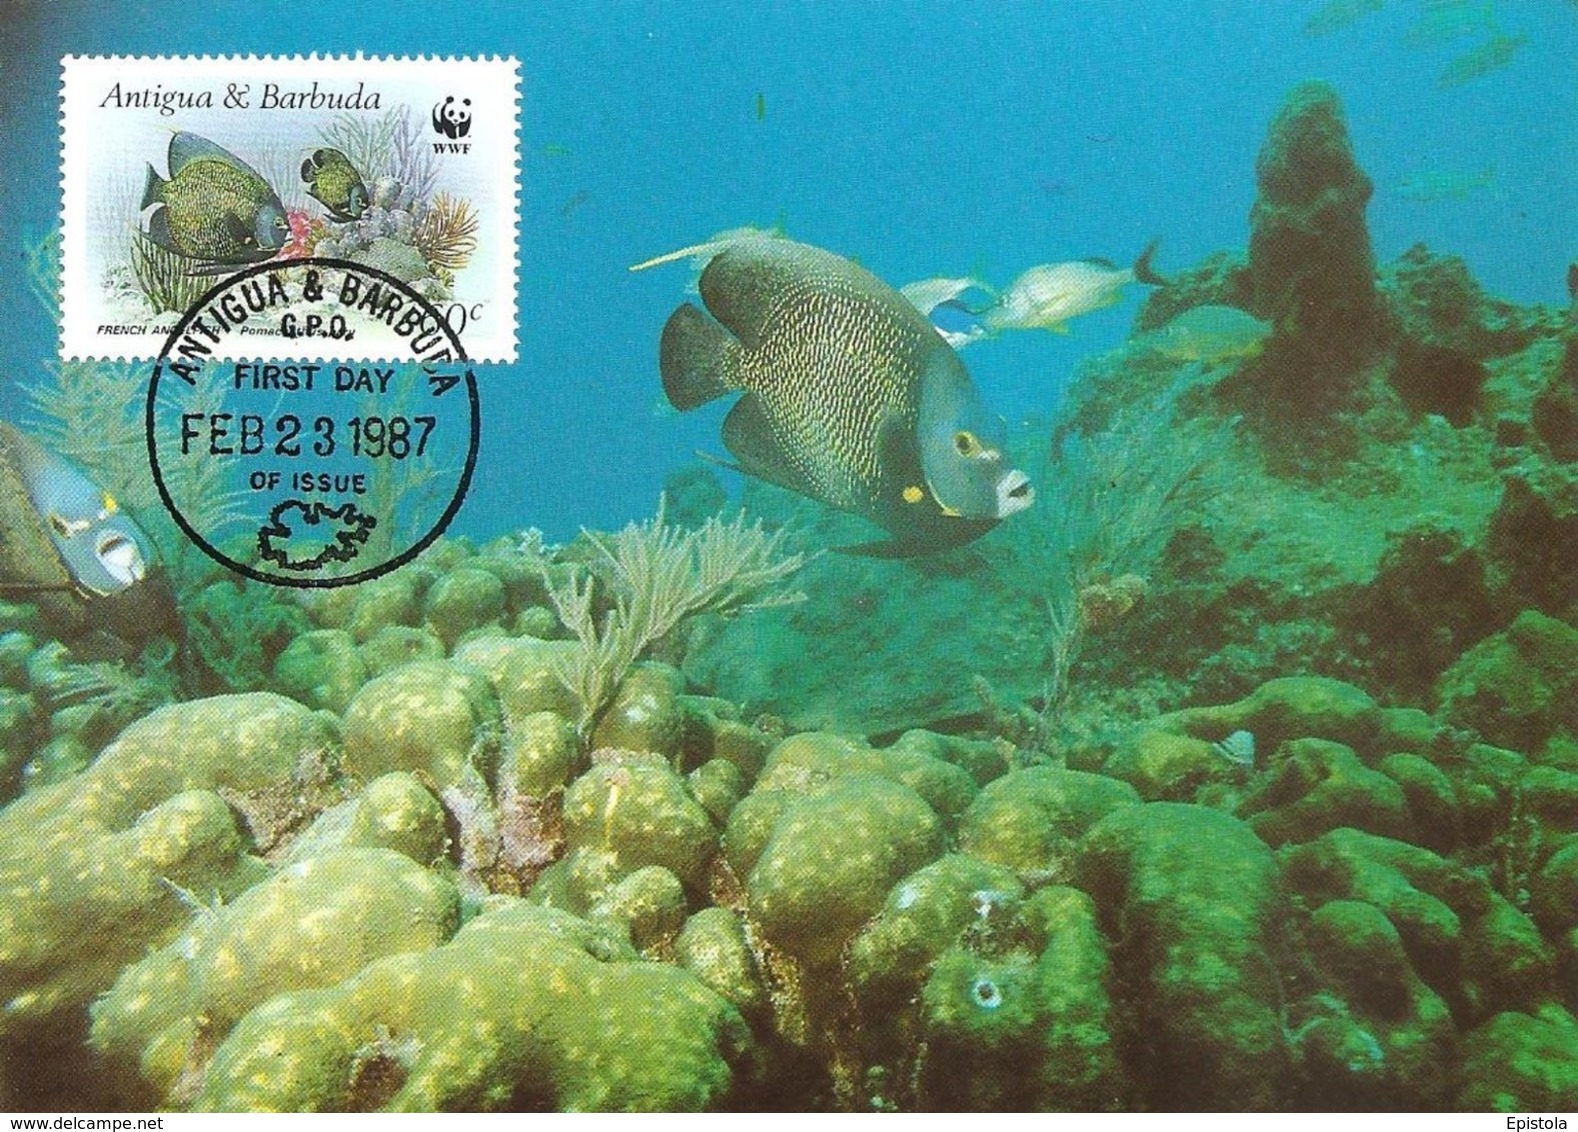 1987 - Antigua & Barbuda - Fond Sous Marin Poisson French Angelfish WWF - Antigua & Barbuda